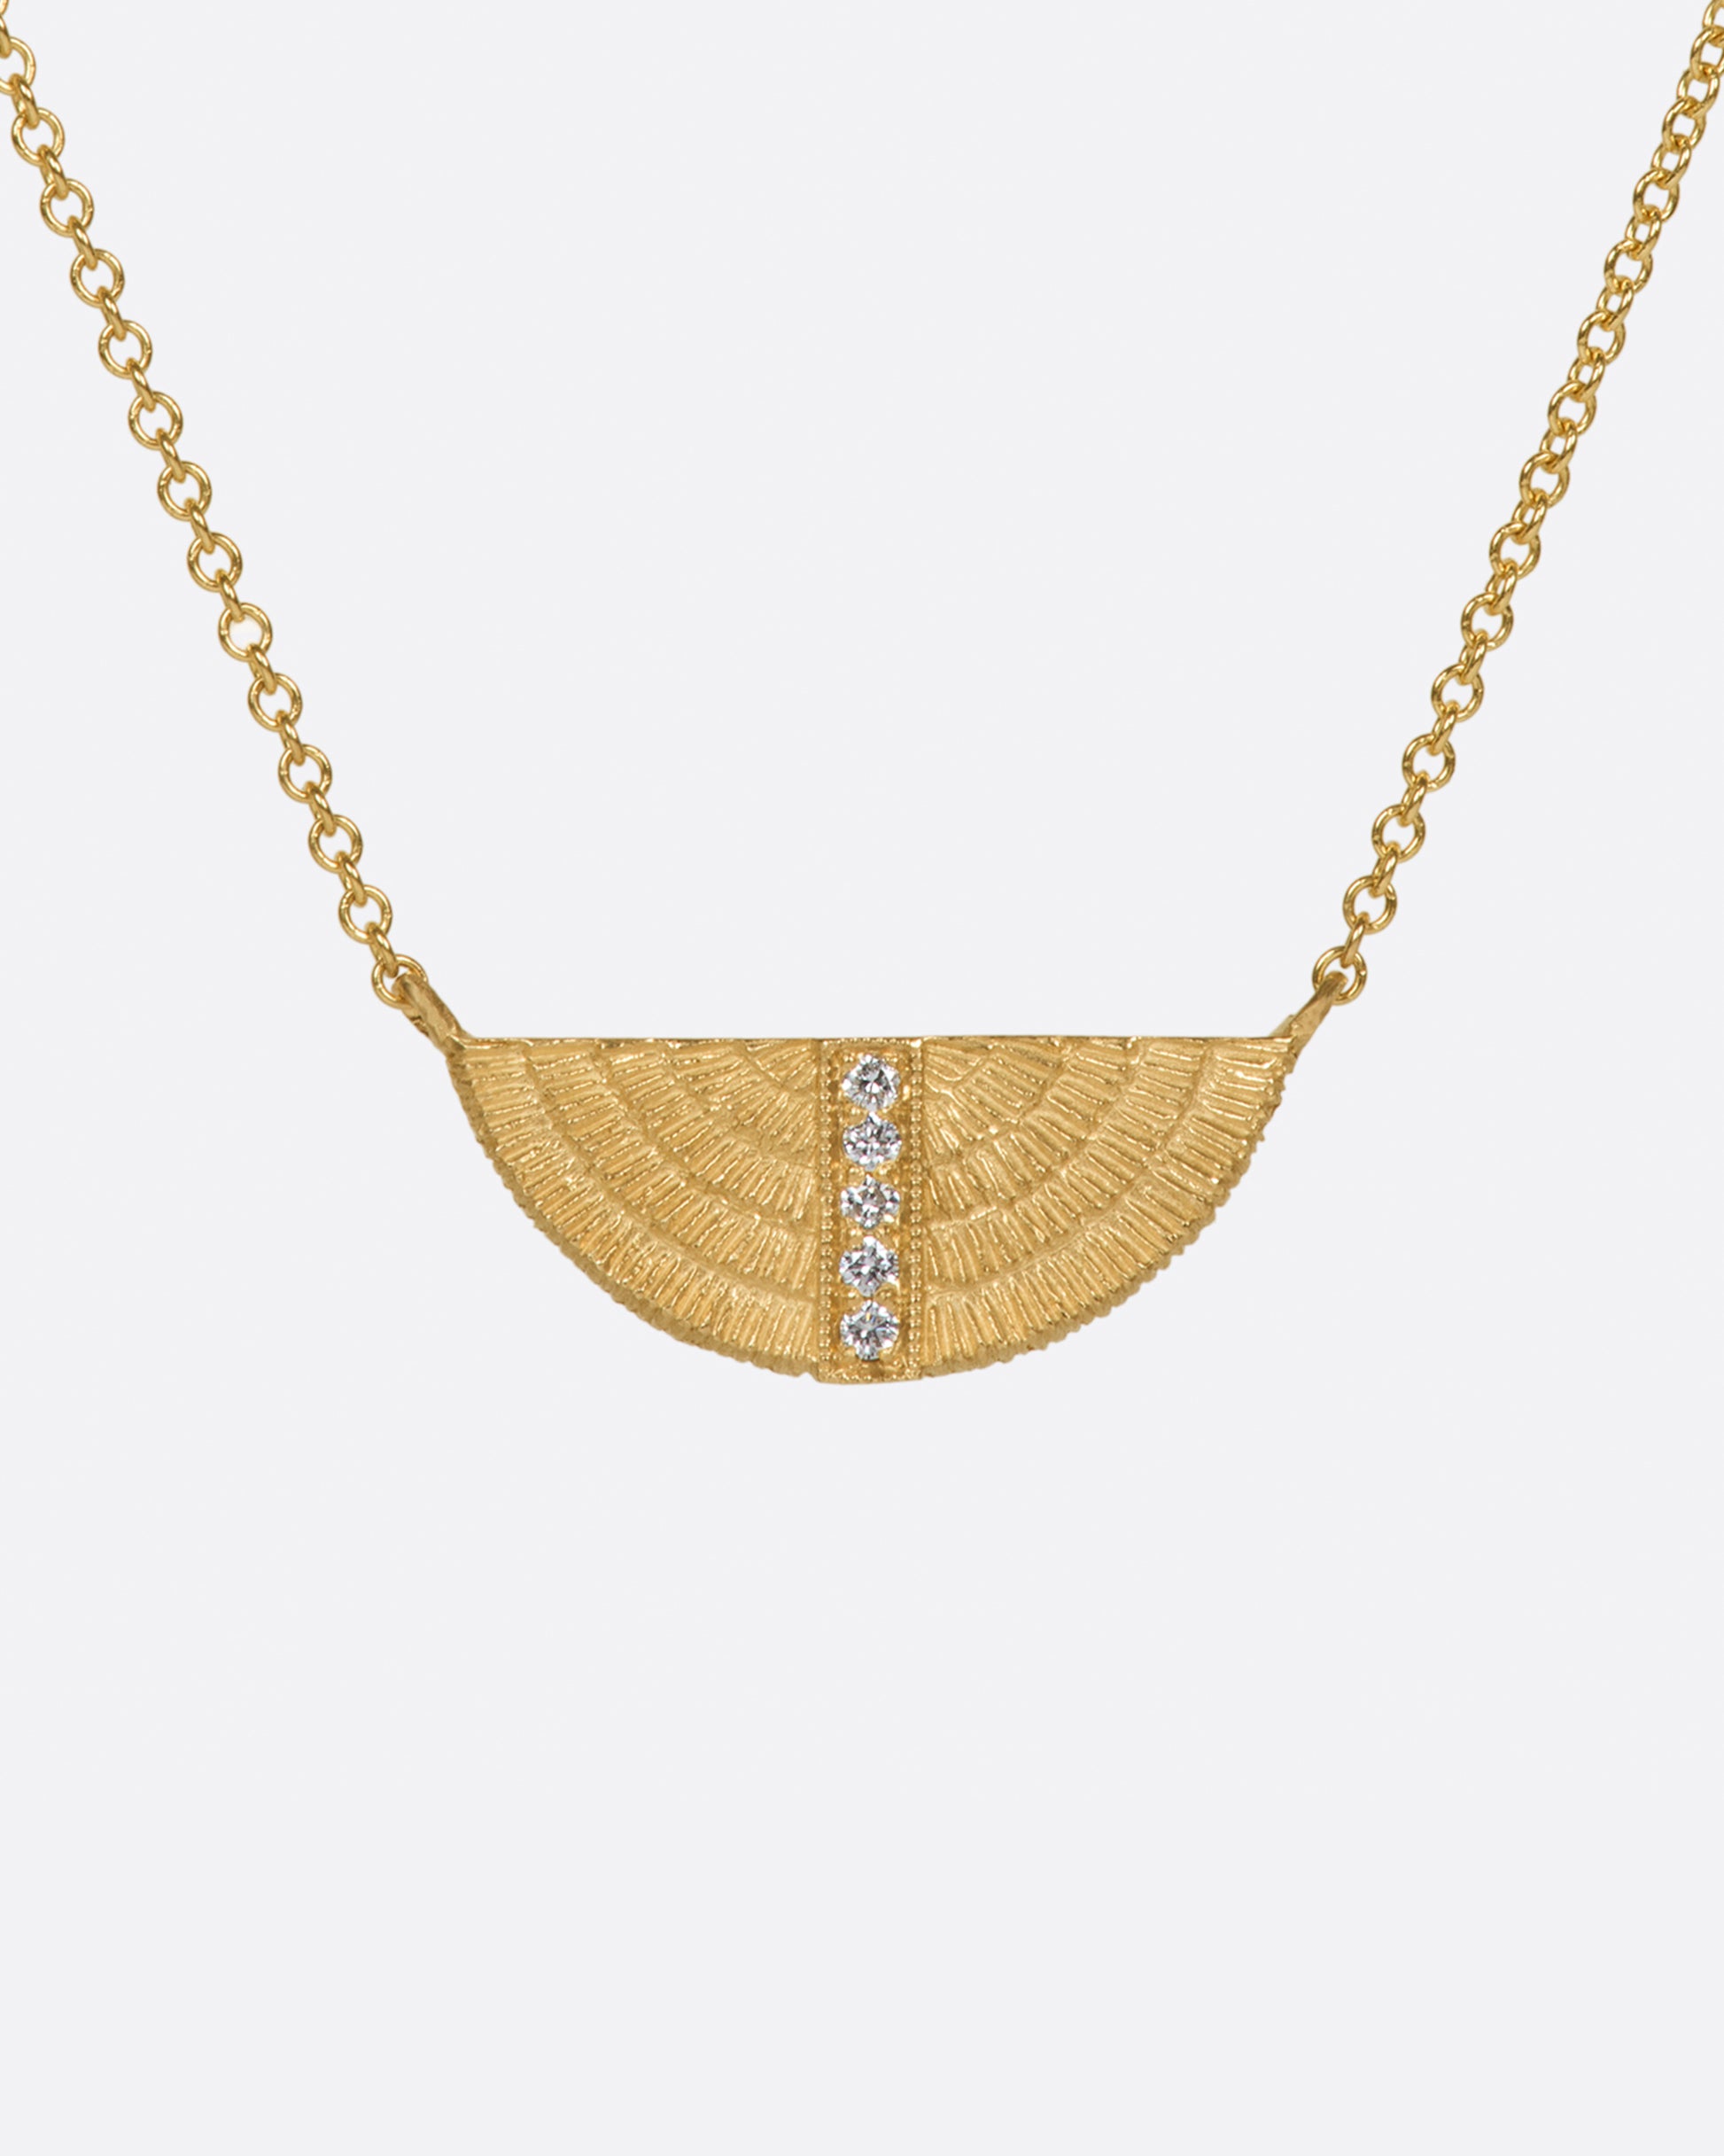 A semi-circular, textured pendant with a row of white diamonds.